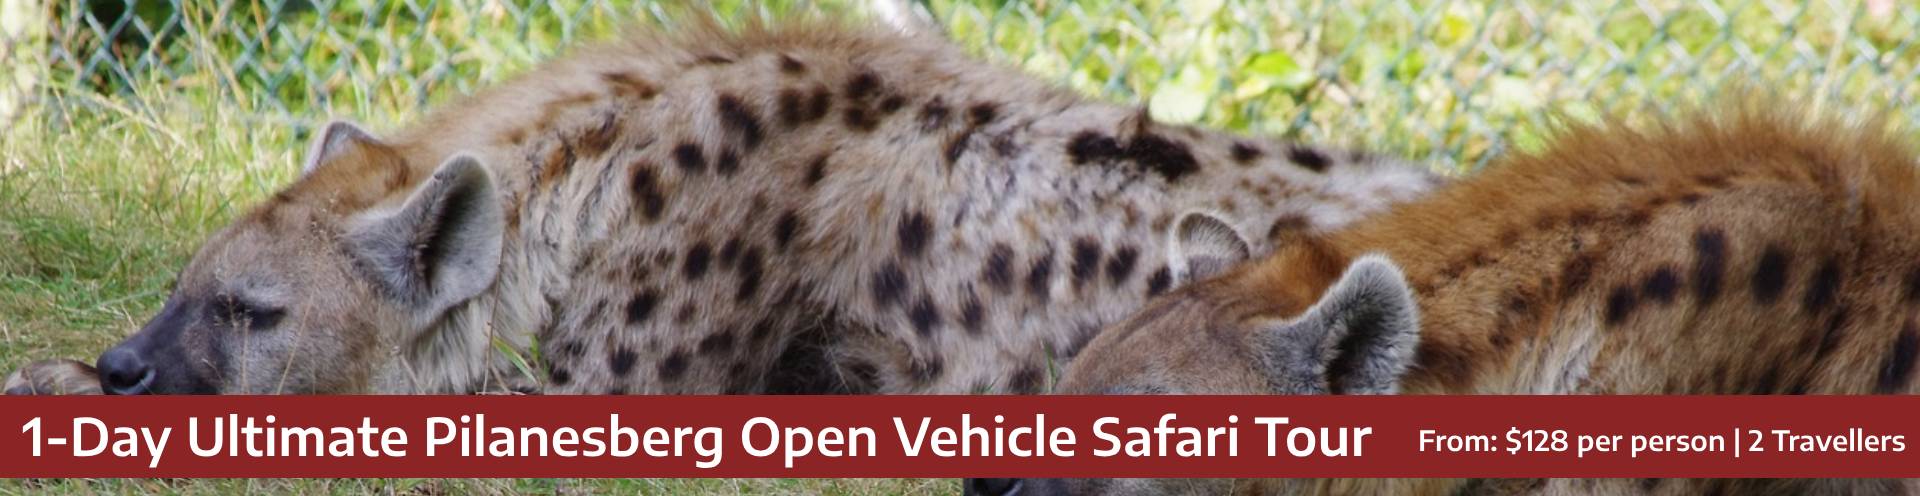 1-Day Ultimate Pilanesberg Open Vehicle Safari Tour